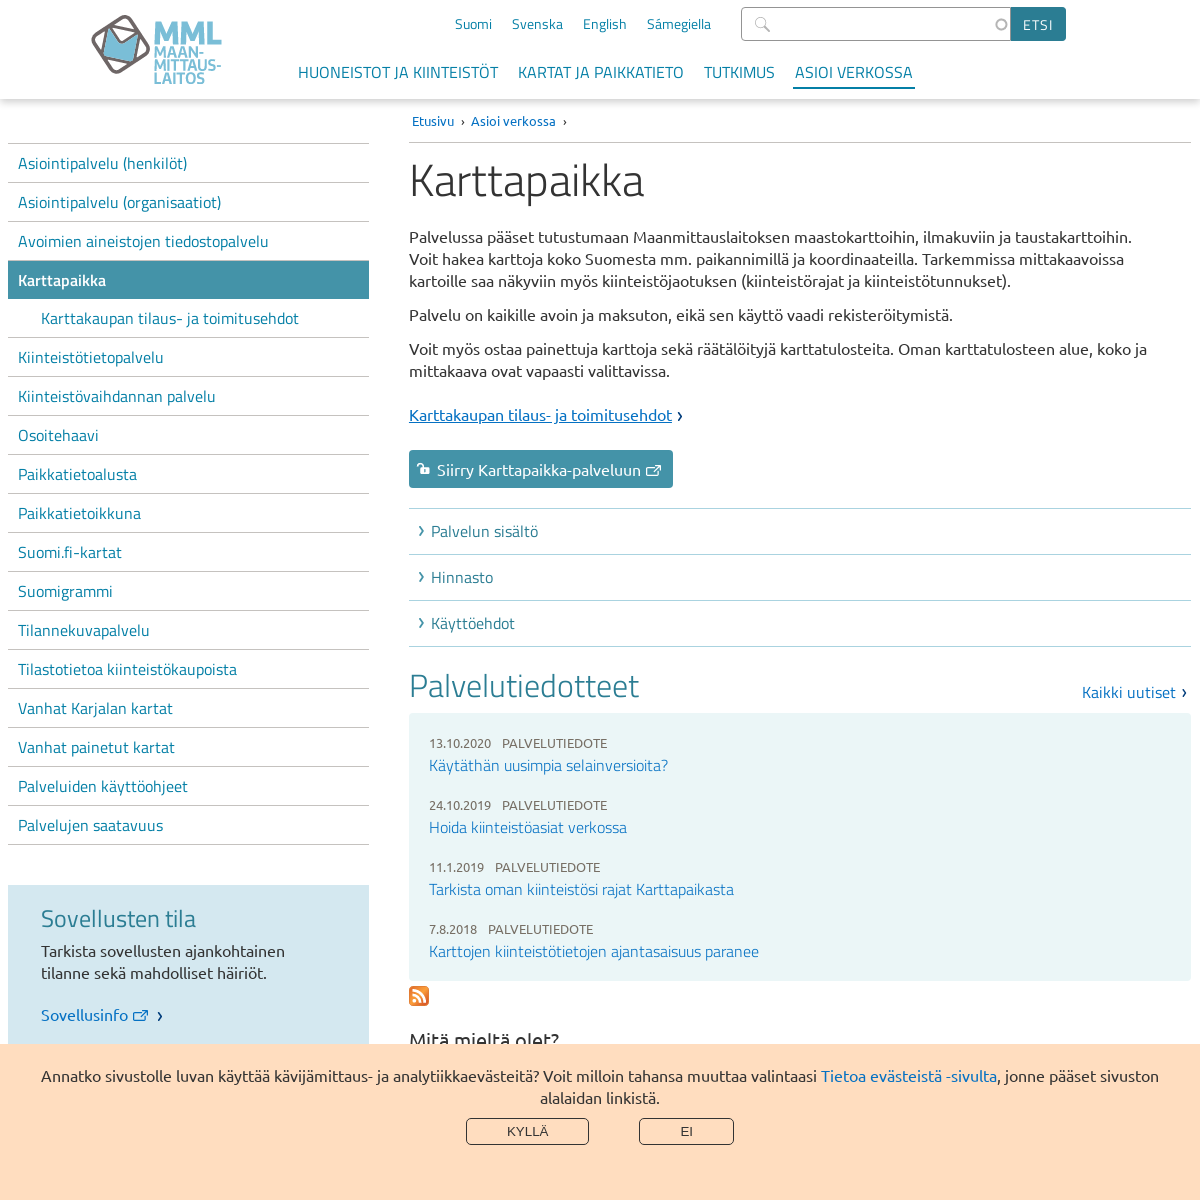 A complete backup of karttapaikka.fi